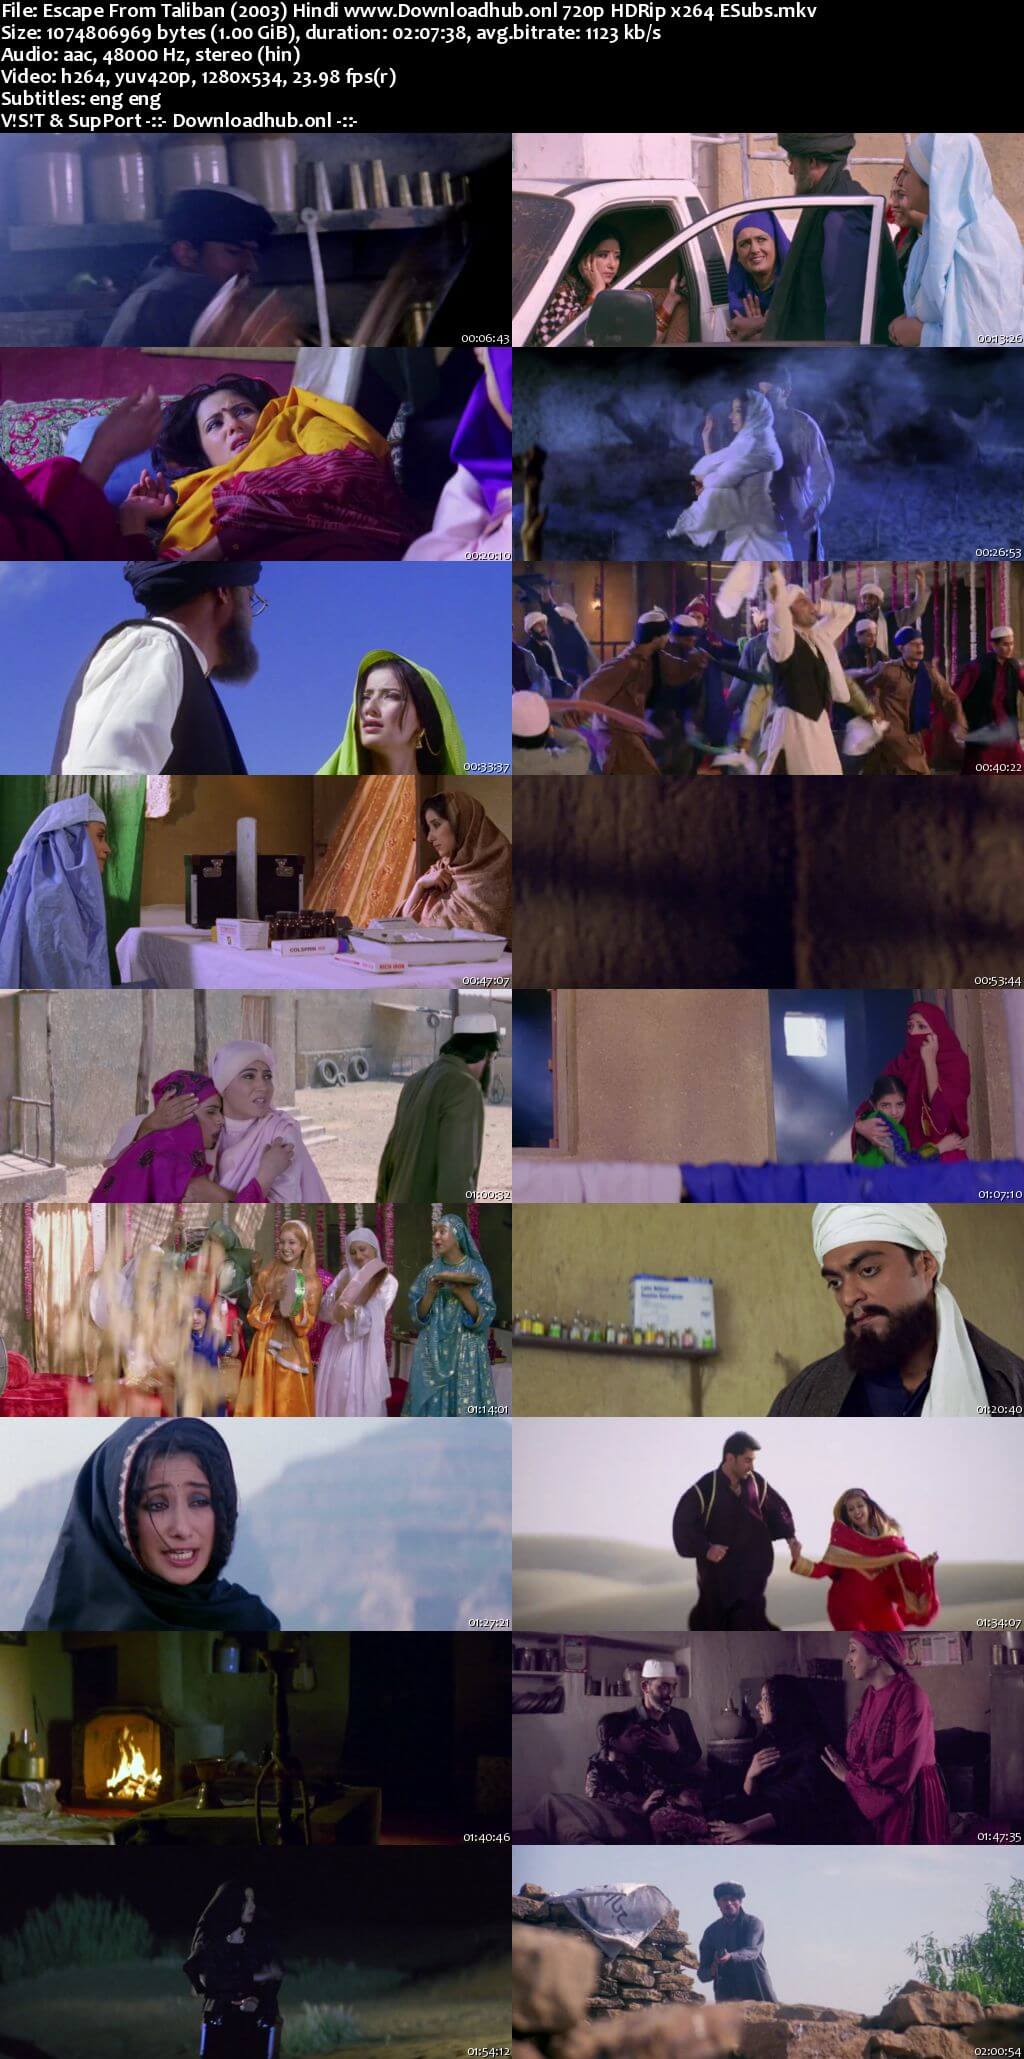 Escape from Taliban 2003 Hindi 720p HDRip ESubs